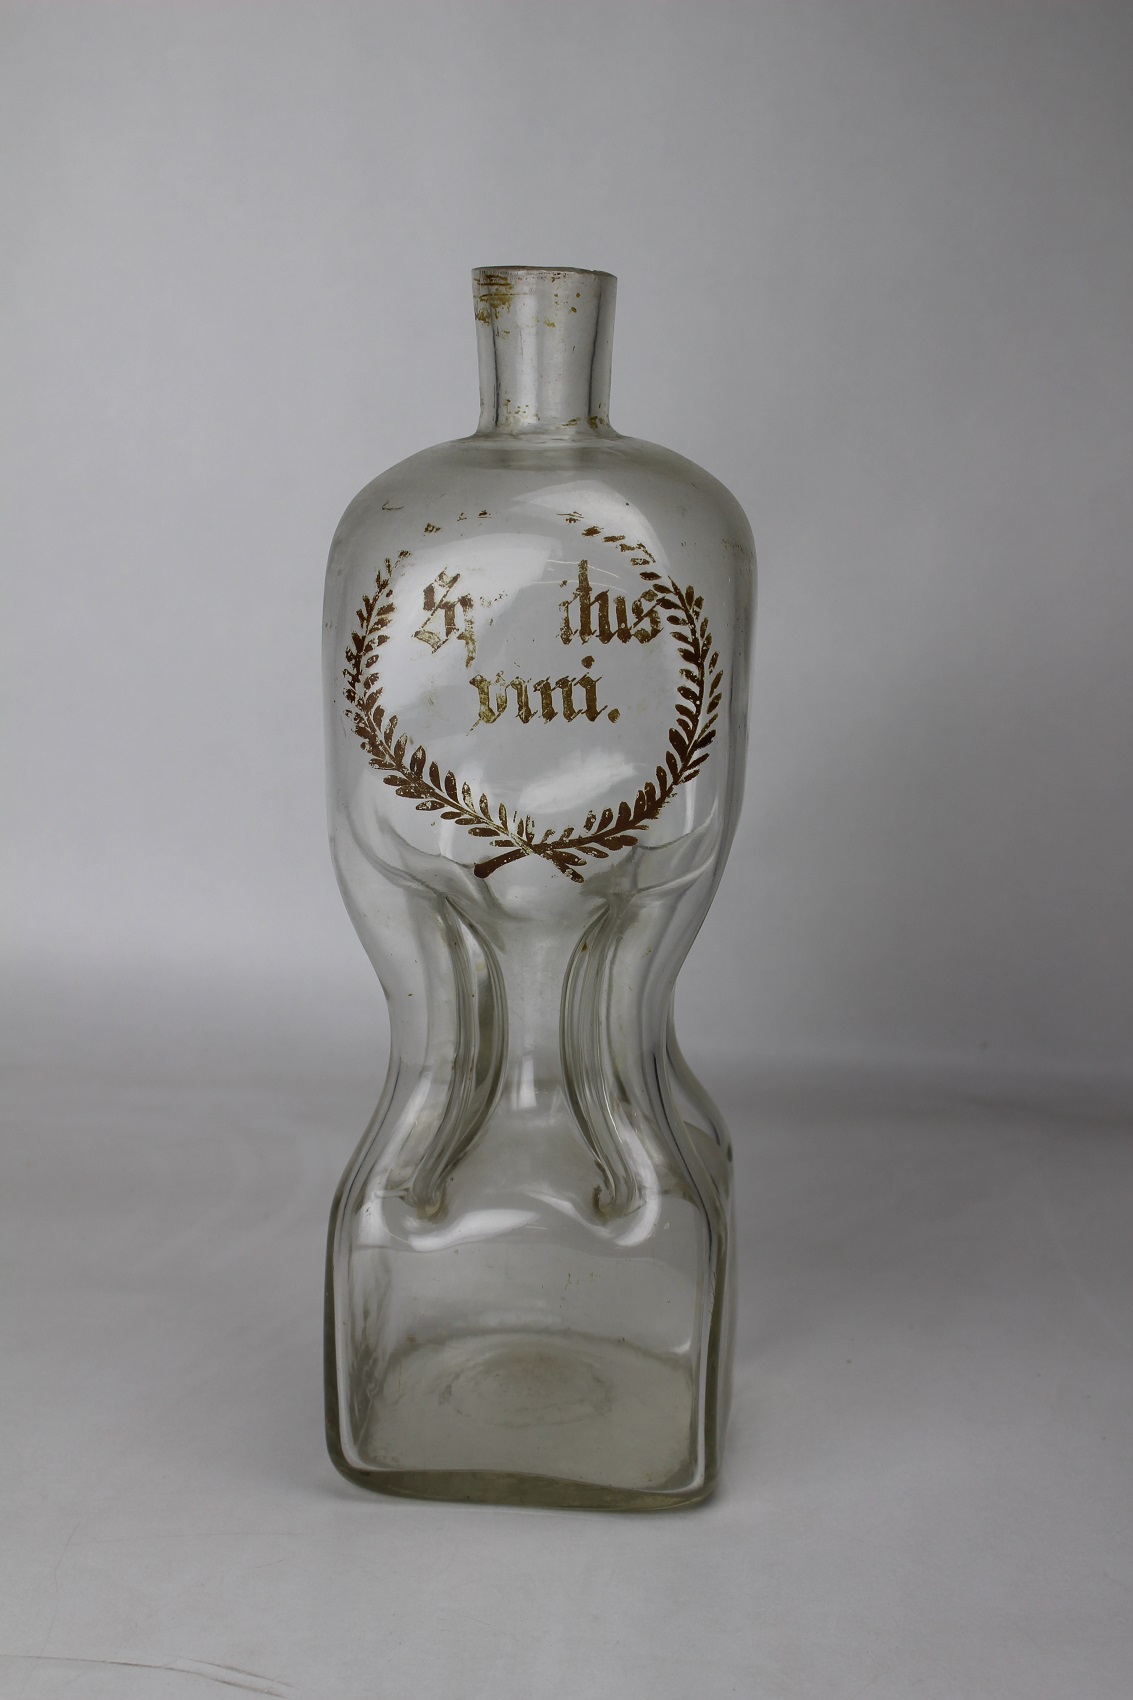 Apothekerflasche, farbloses Glas, Spiritus Vini, 18. Jh., Sammlung Stockmann im Museum Baruther Glashütte (Museum Baruther Glashütte CC BY-NC-SA)